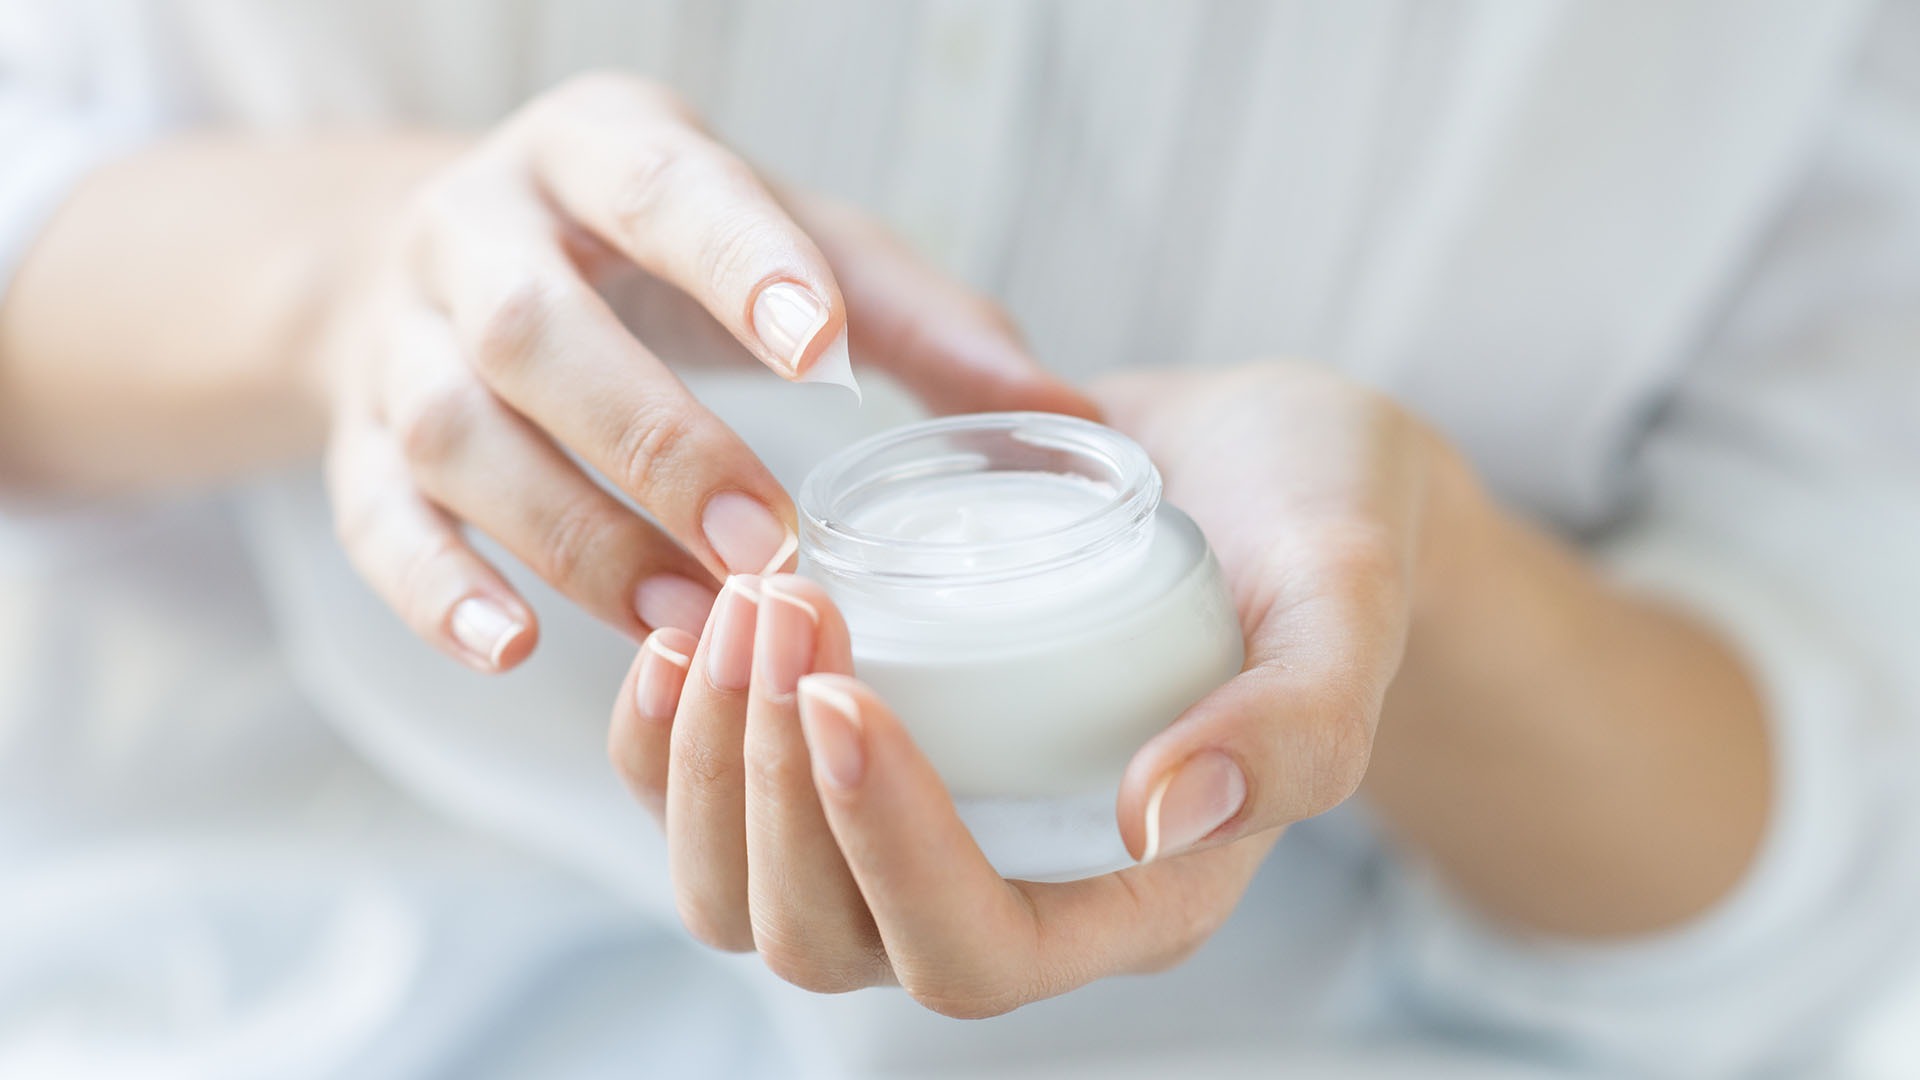 Closeup shot of hands applying moisturizer. Beauty woman holding a glass jar of skin cream. Shallow depth of field with focus on moisturizer.